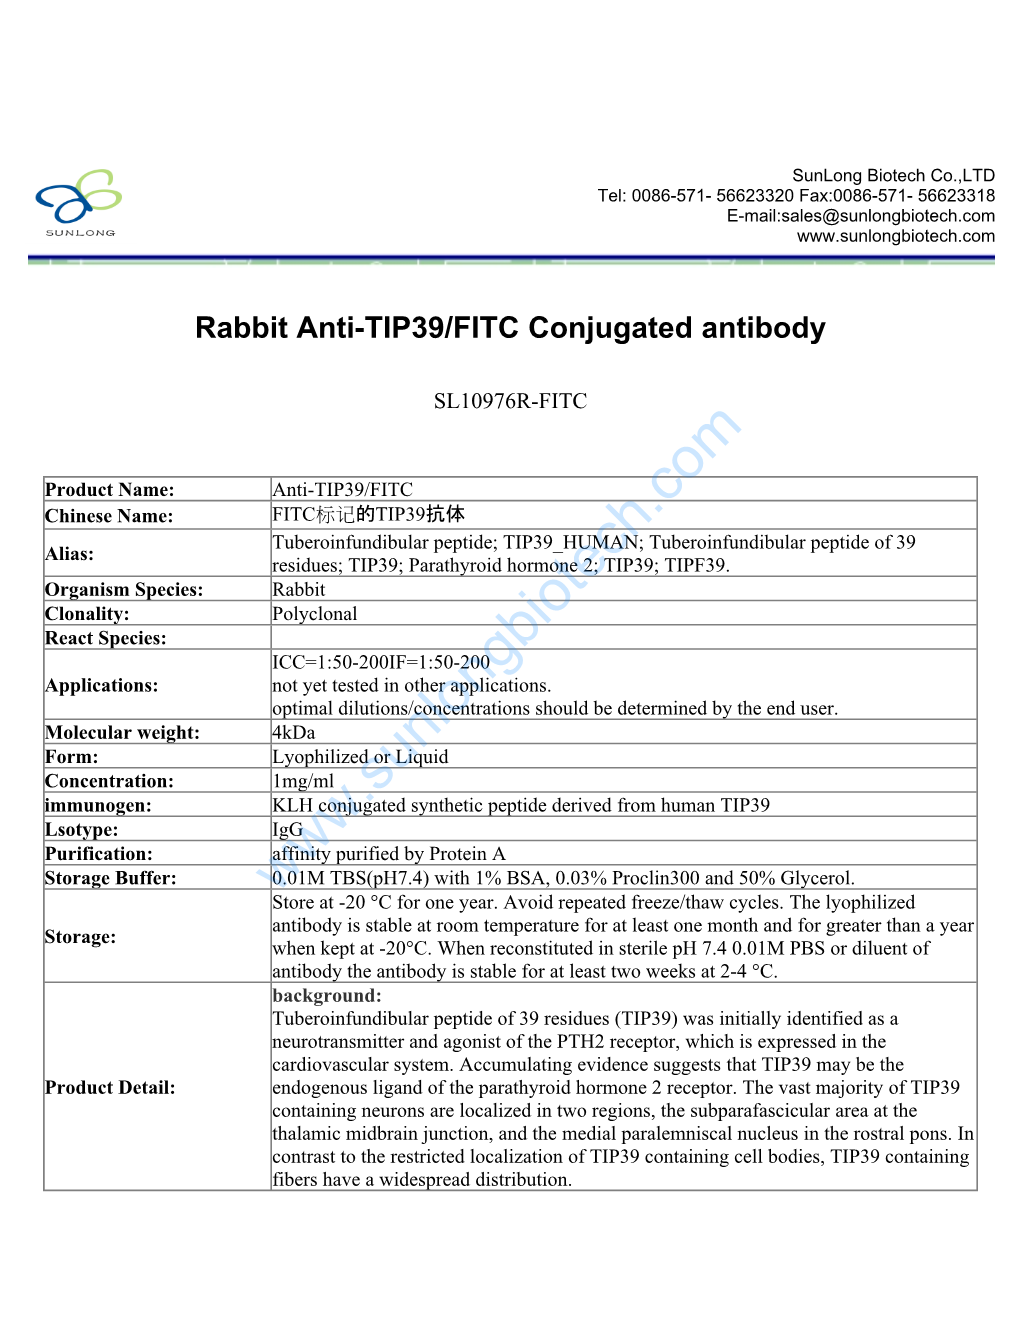 Rabbit Anti-TIP39/FITC Conjugated Antibody-SL10976R-FITC